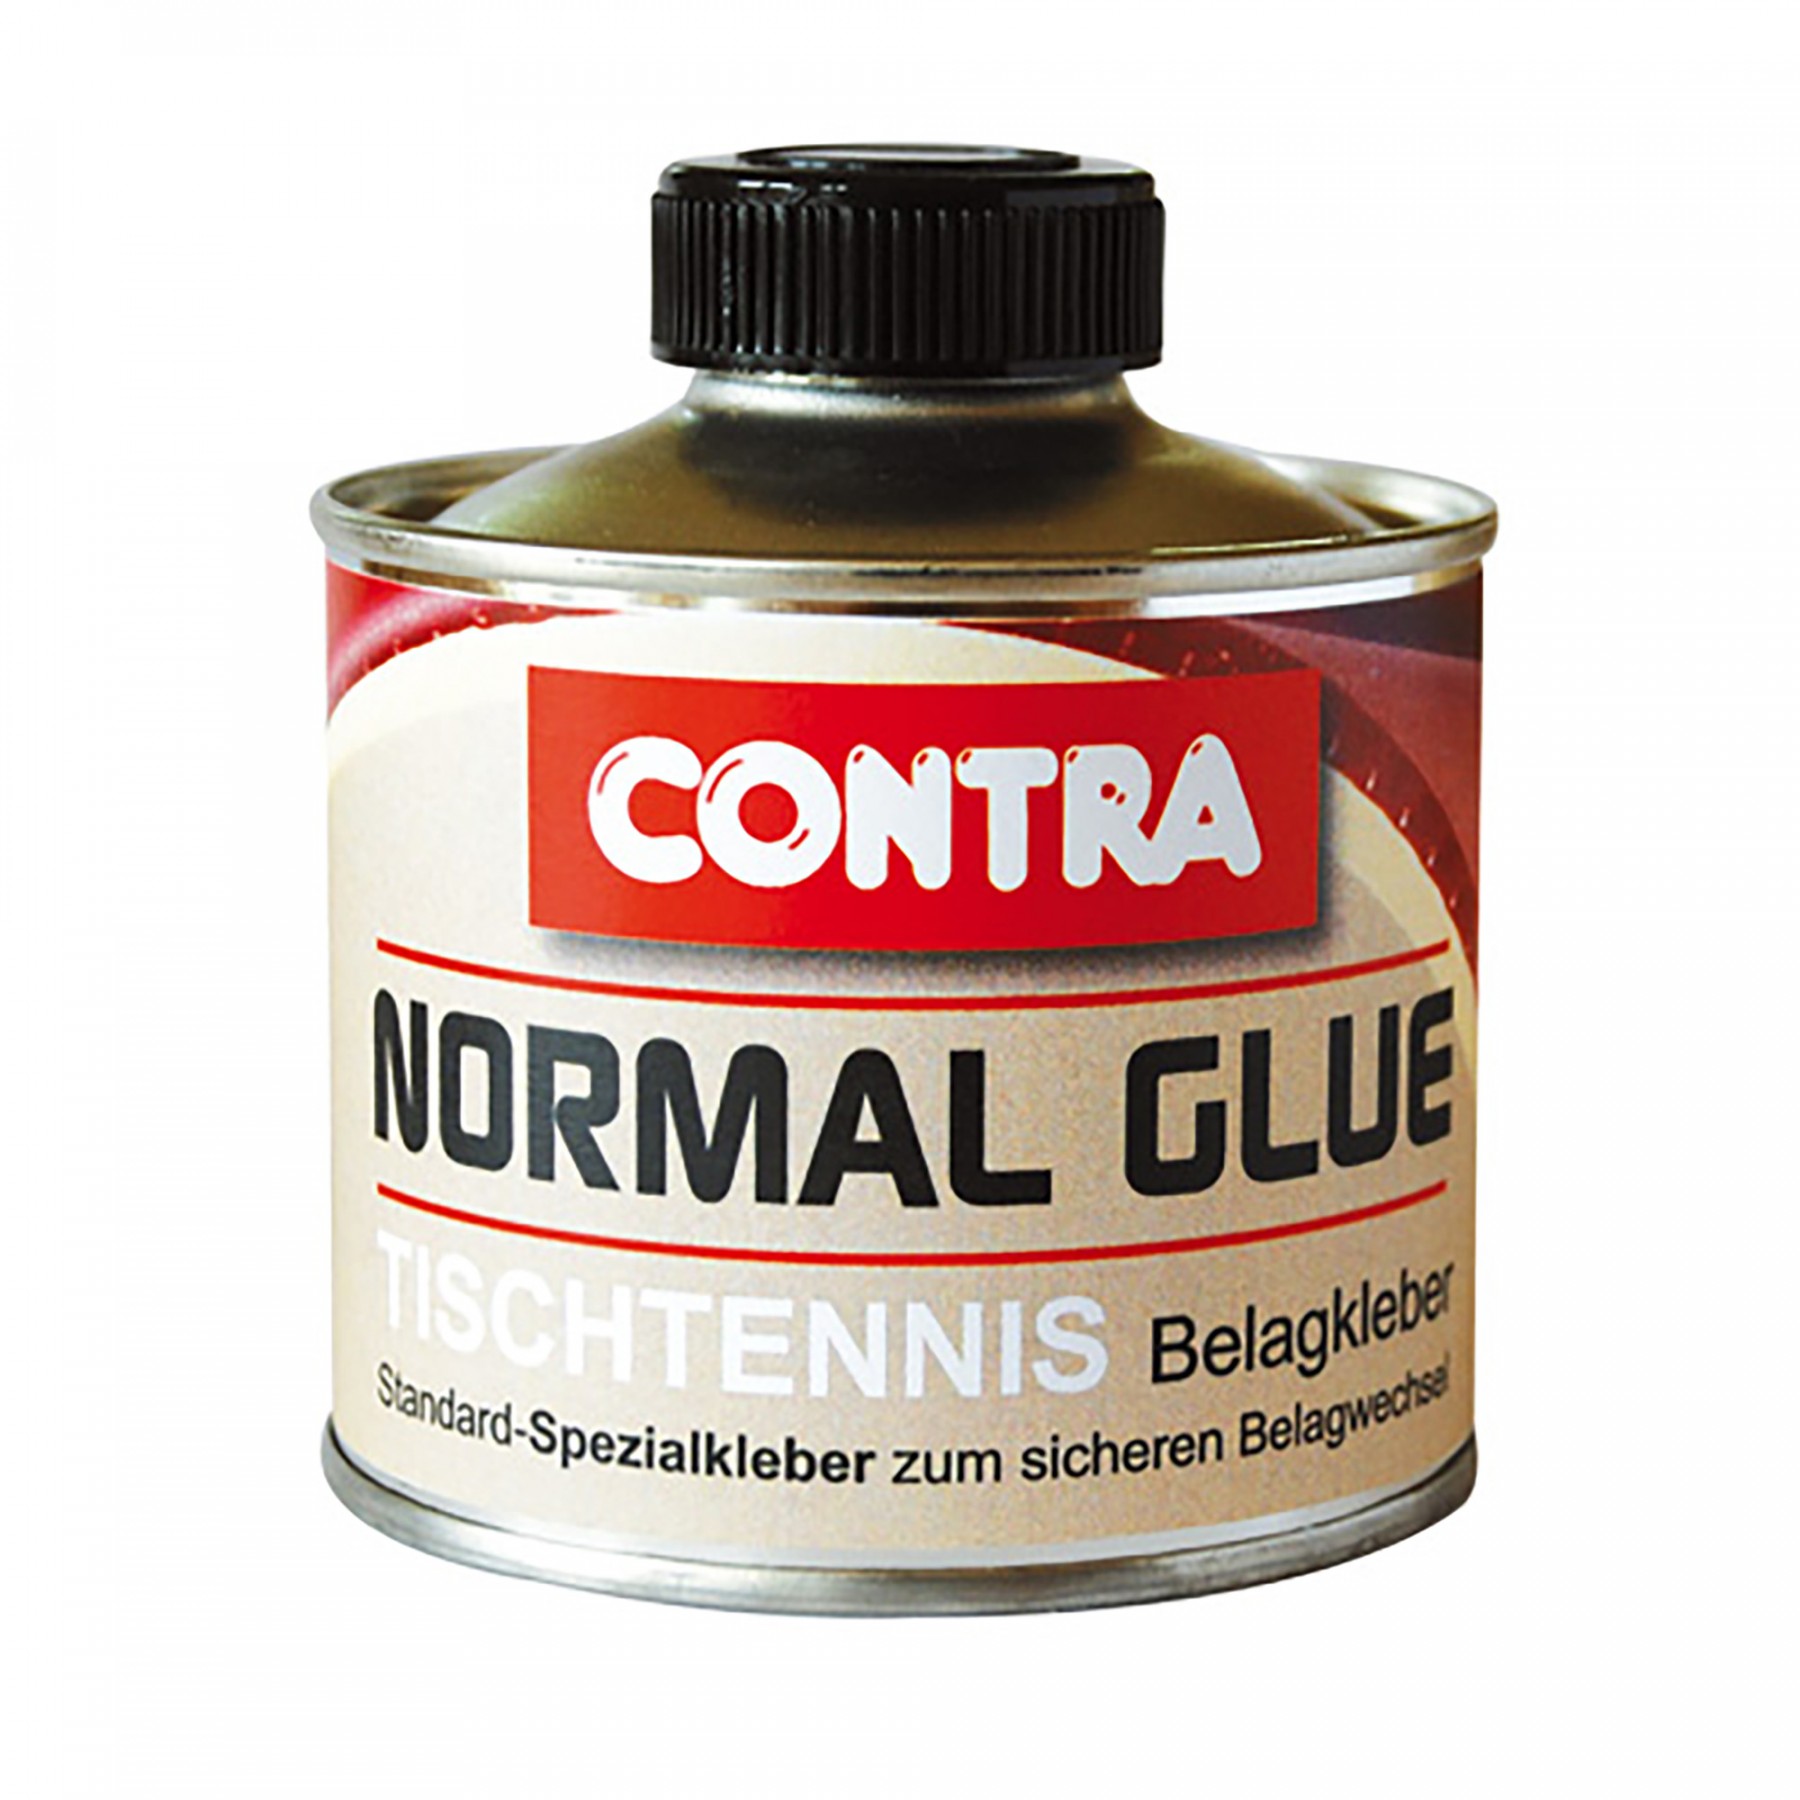 Contra Normal Glue